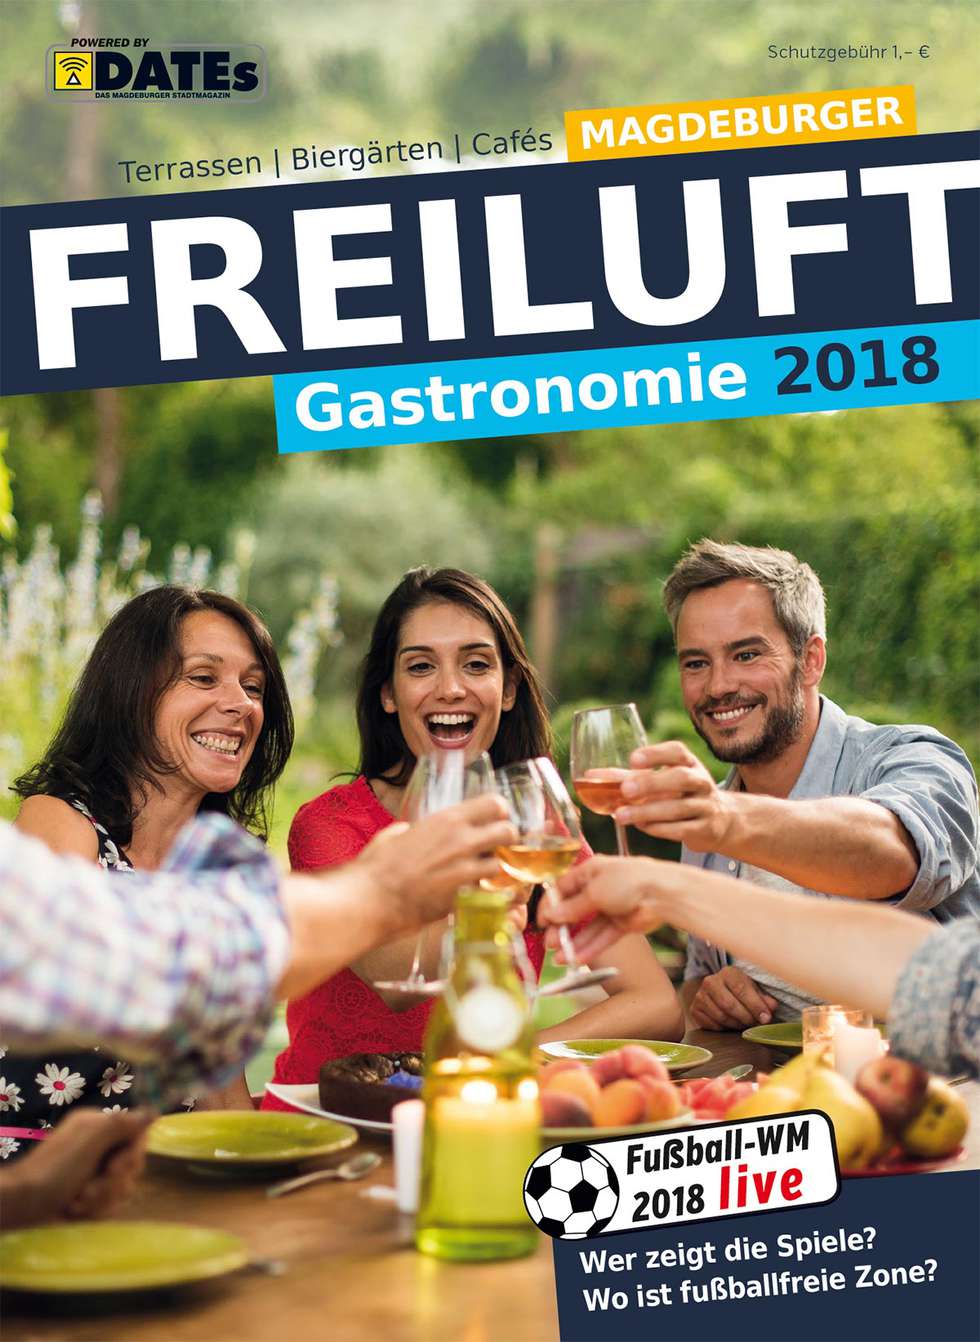 Magdeburger Freiluft-Gastronomie 2018